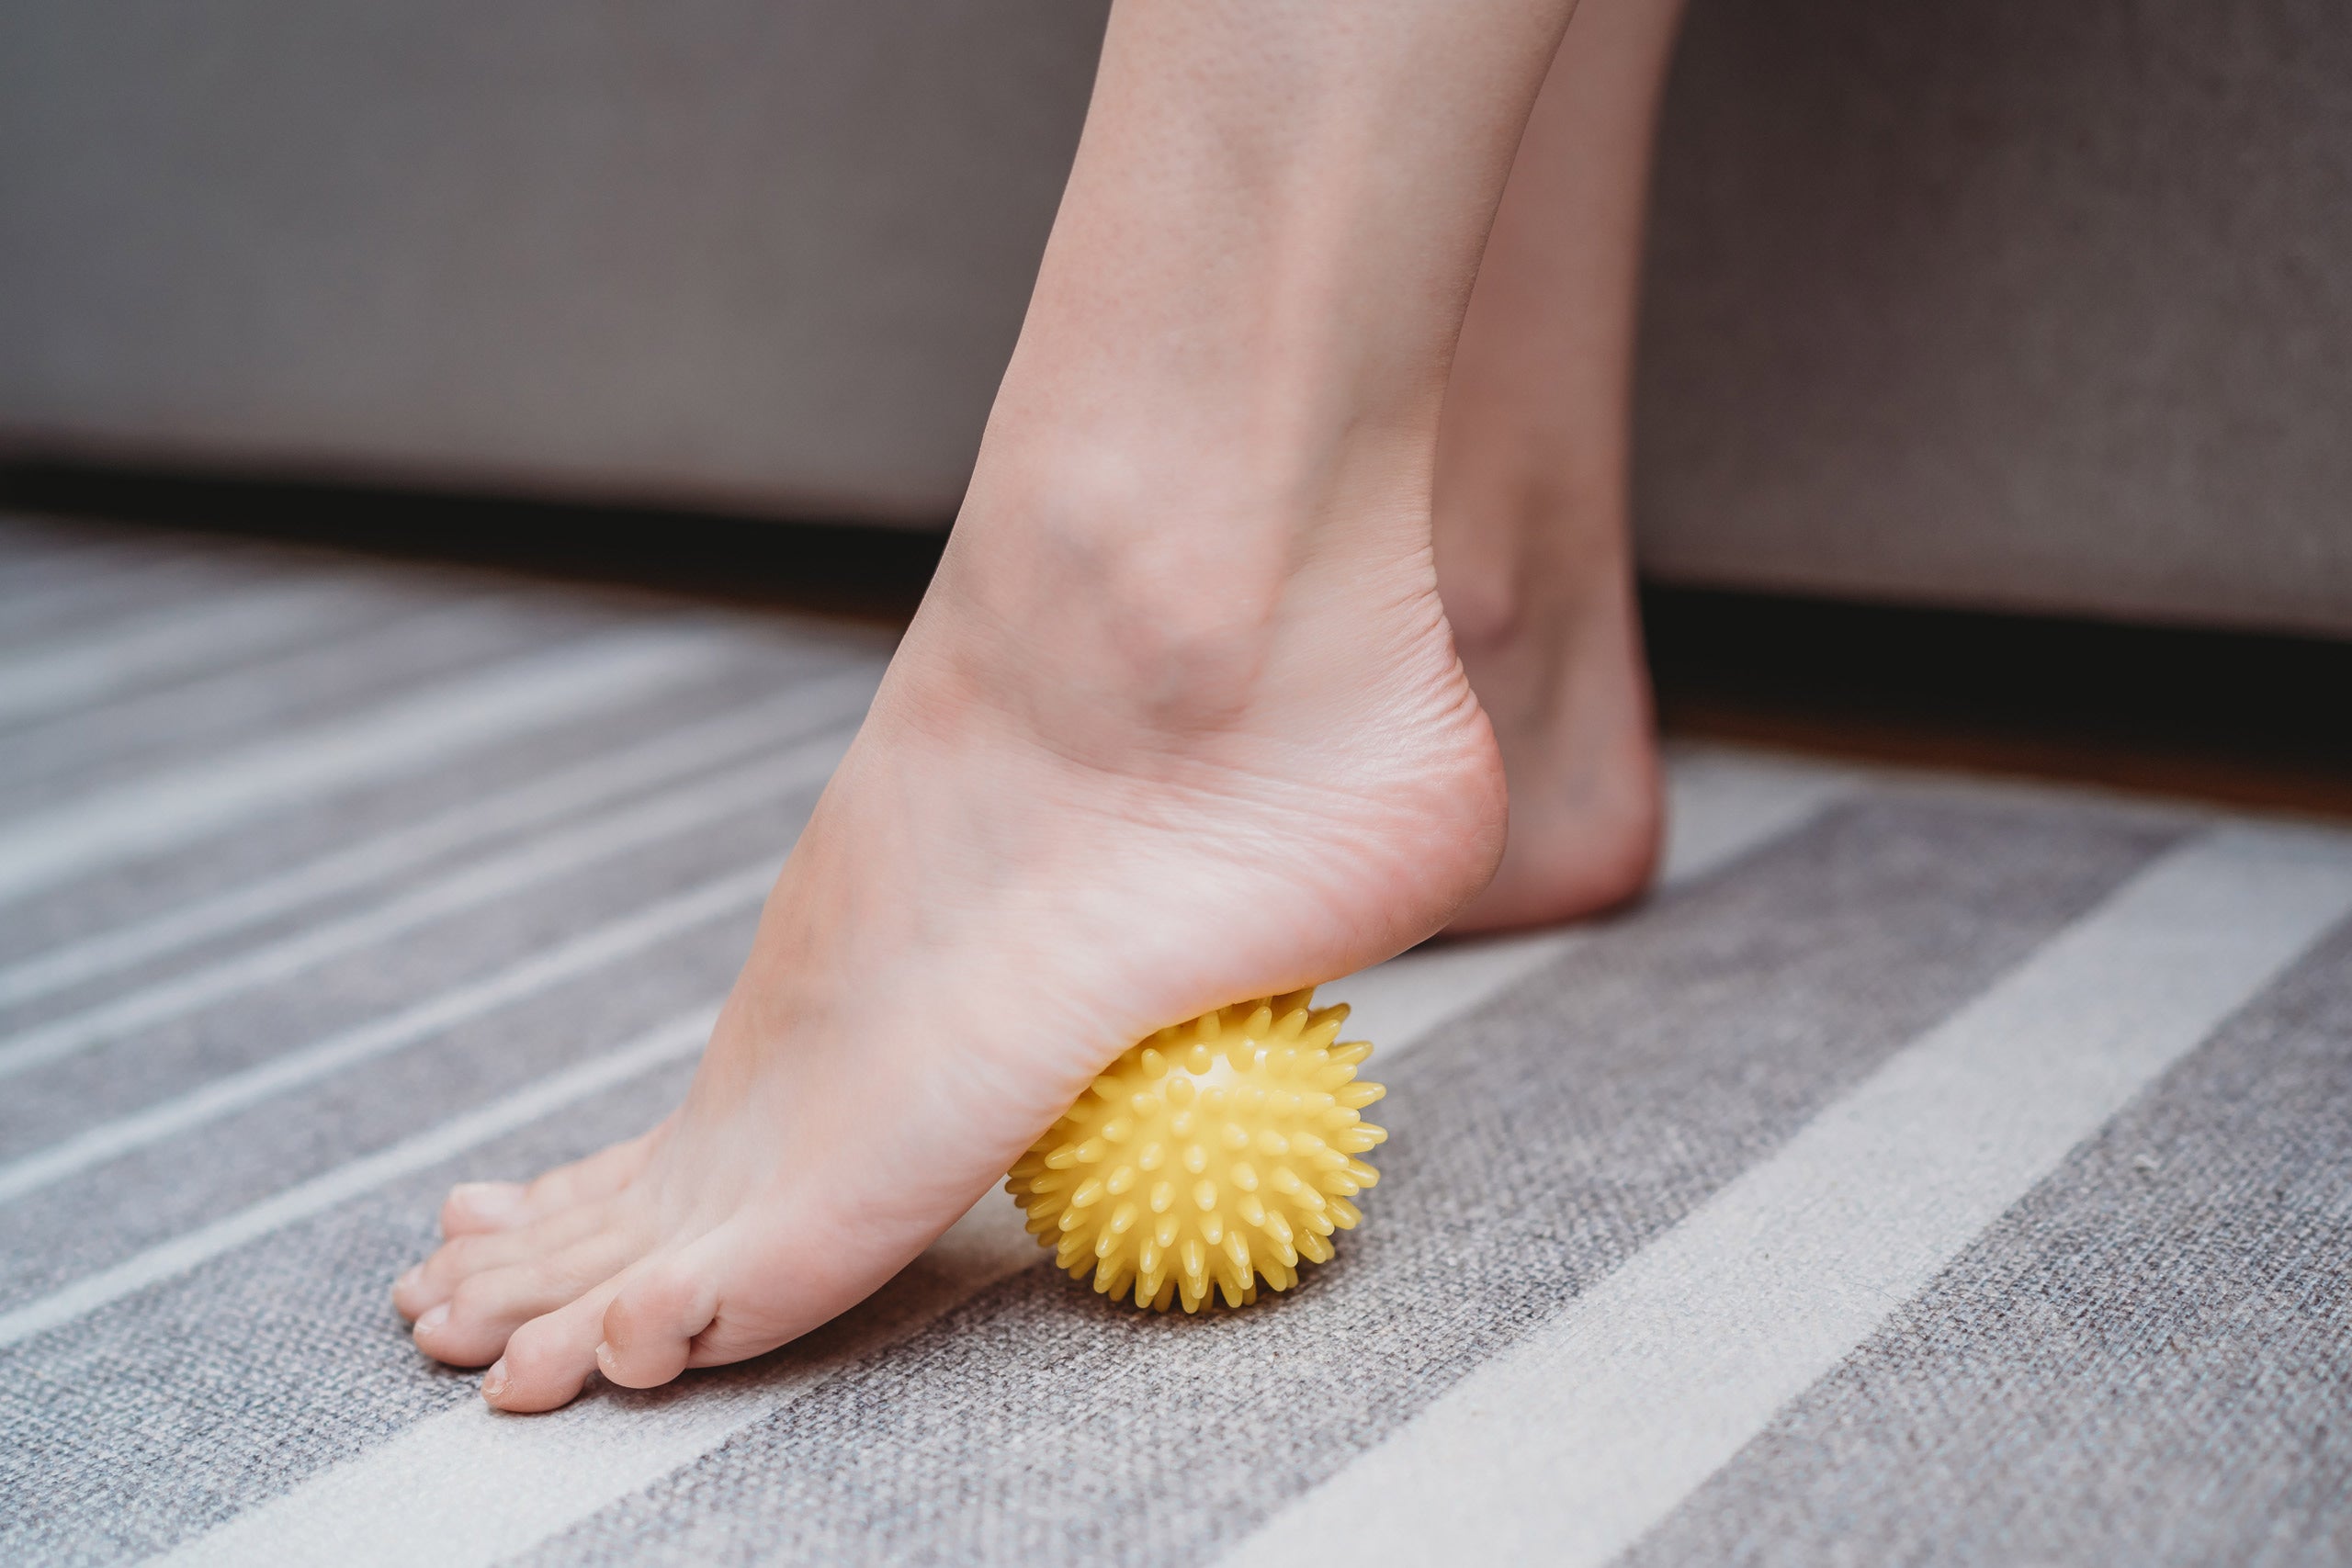 Kanjo Acupressure Foot Pain Relief Mat  Pressure Point Foot Massager for  Plantar Fasciitis, Heel Pain